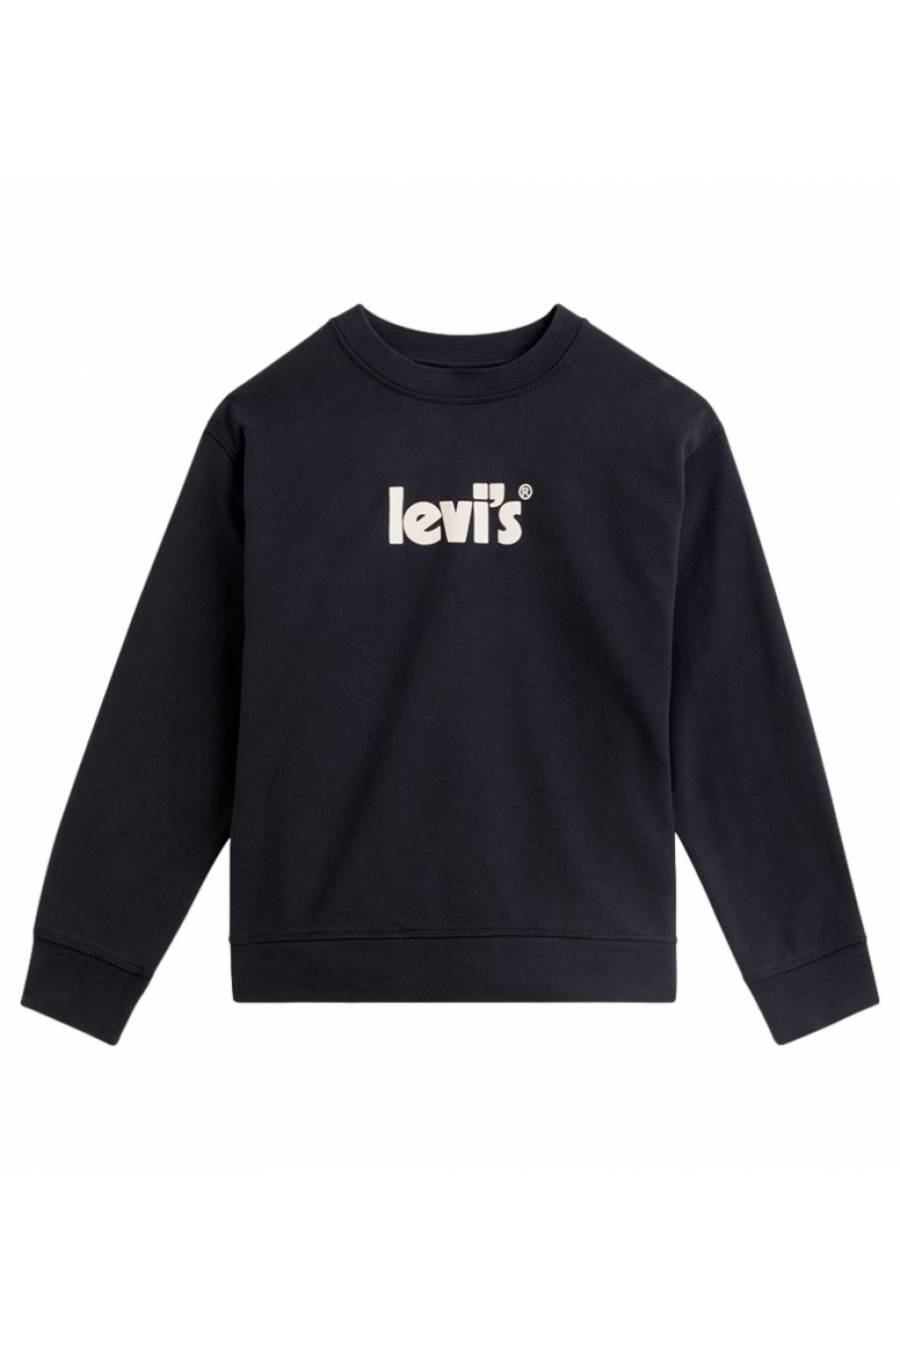 Camiseta Levi's Grpahic Standard Crew 18686-0056